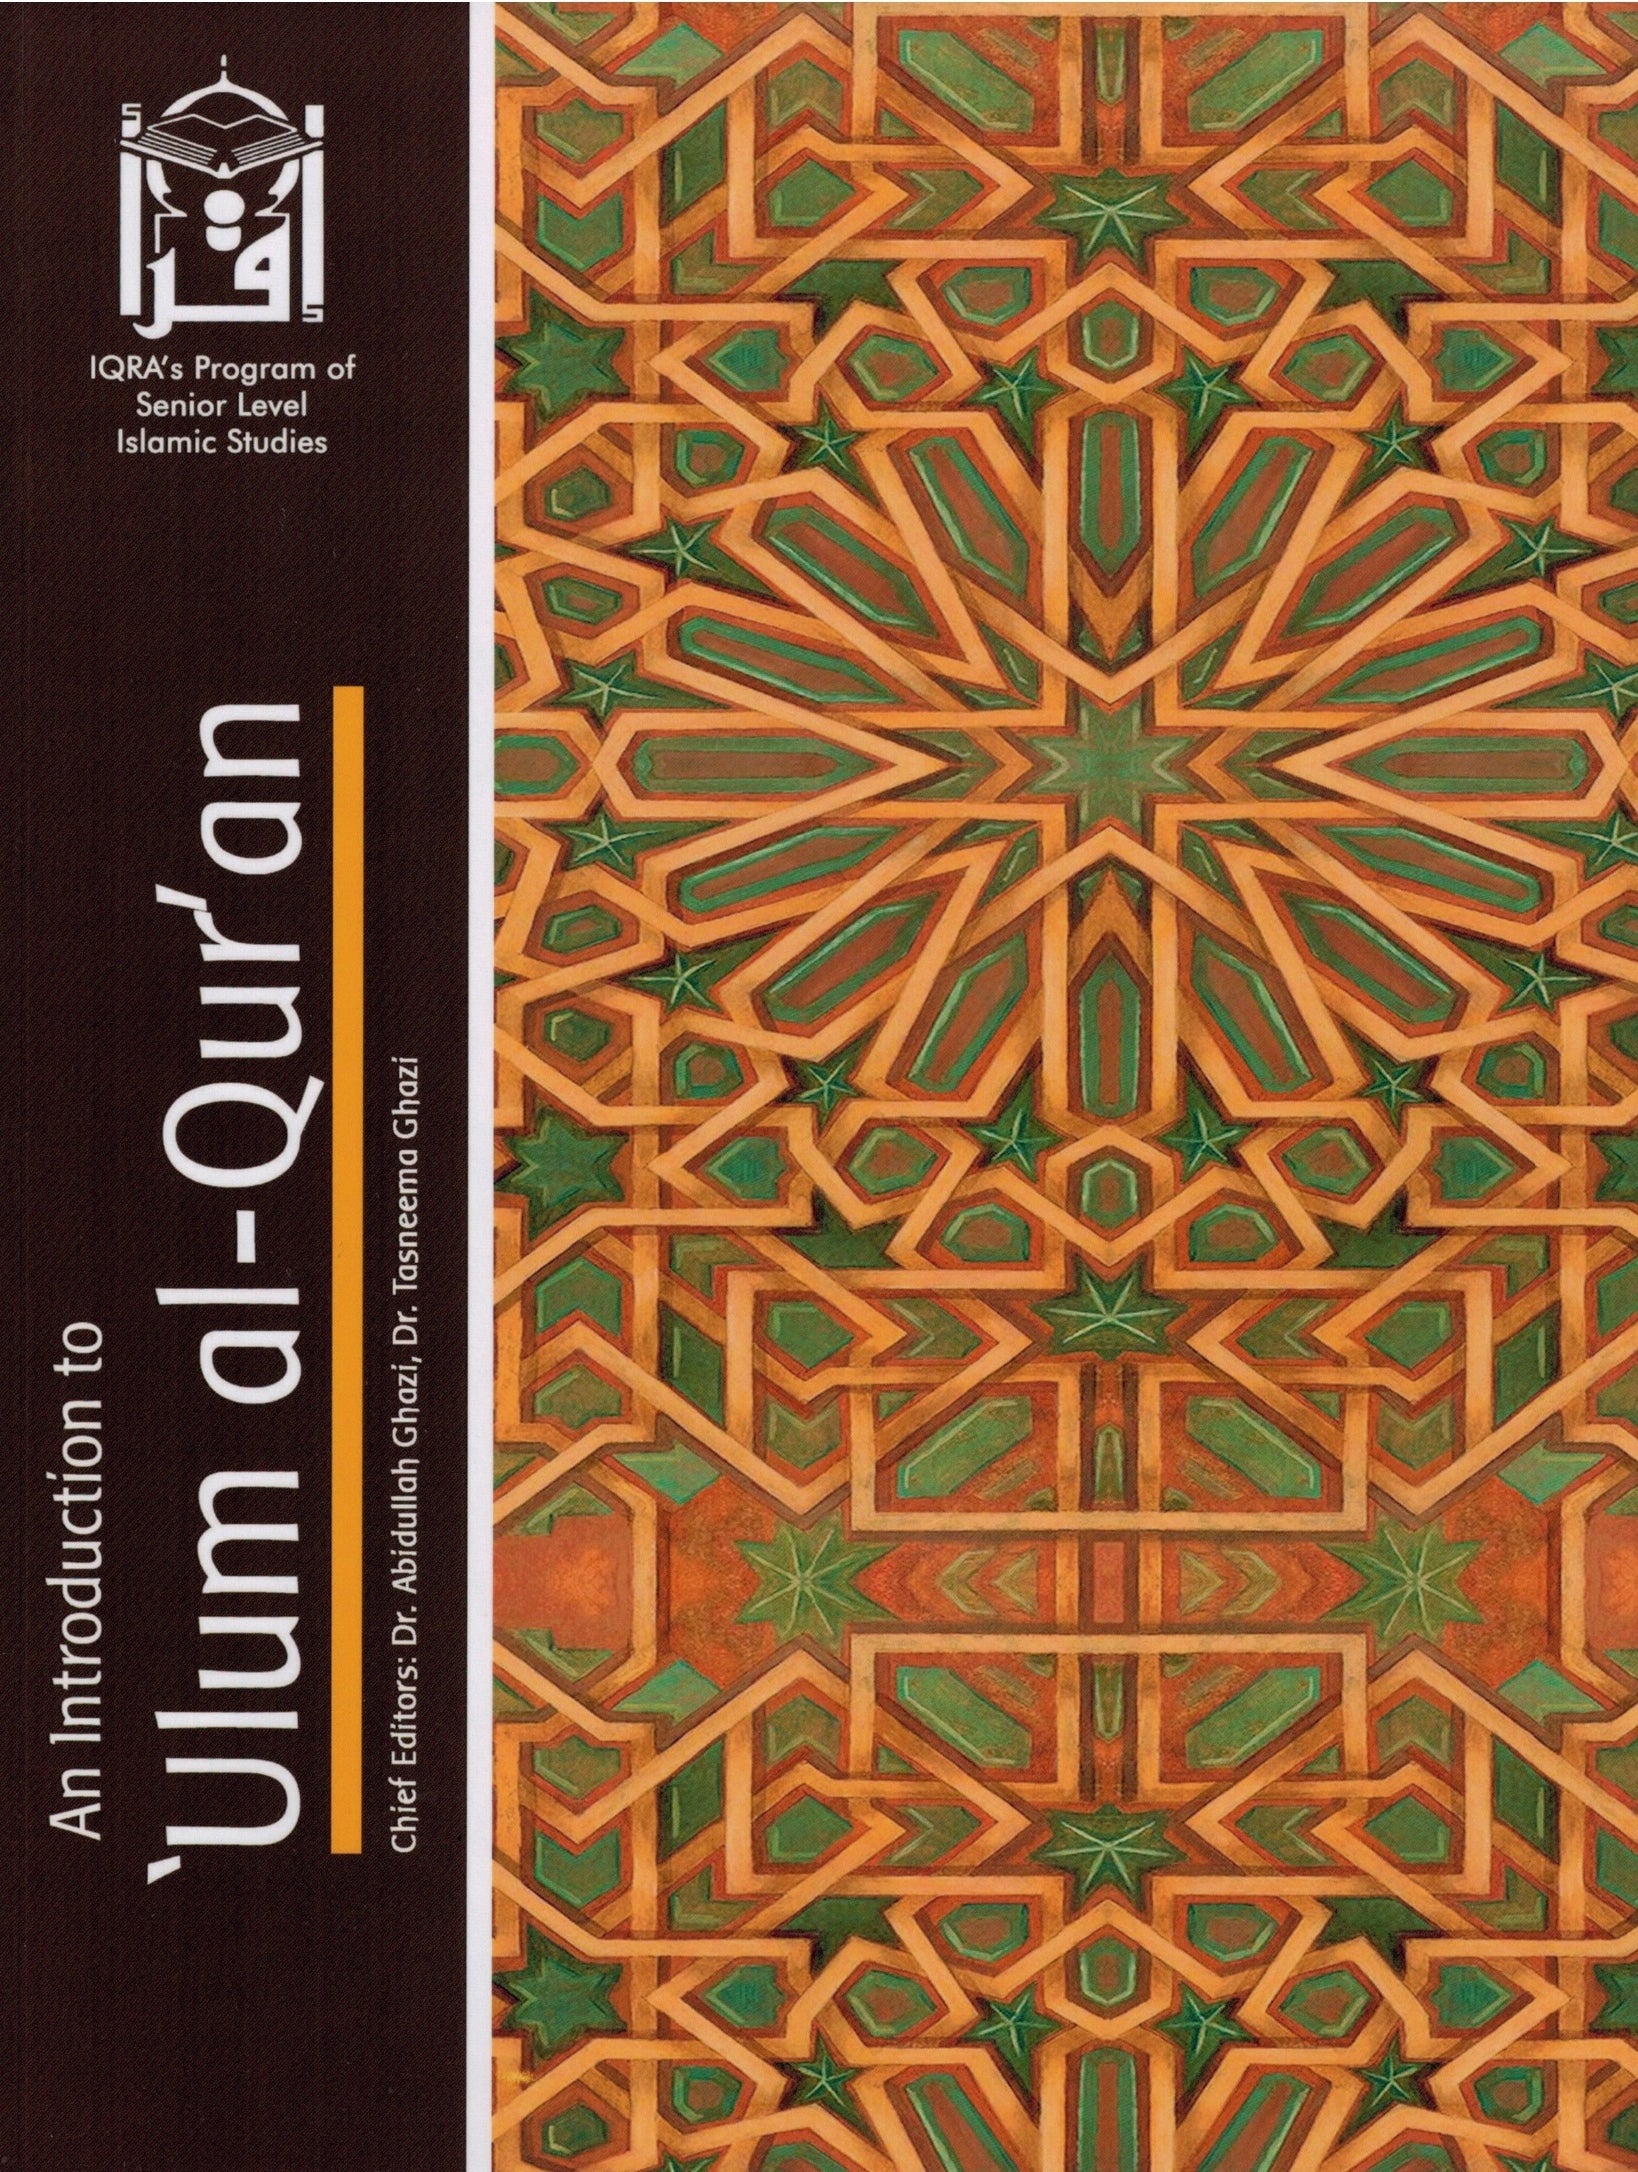 Ulum Al Quran - An Introduction